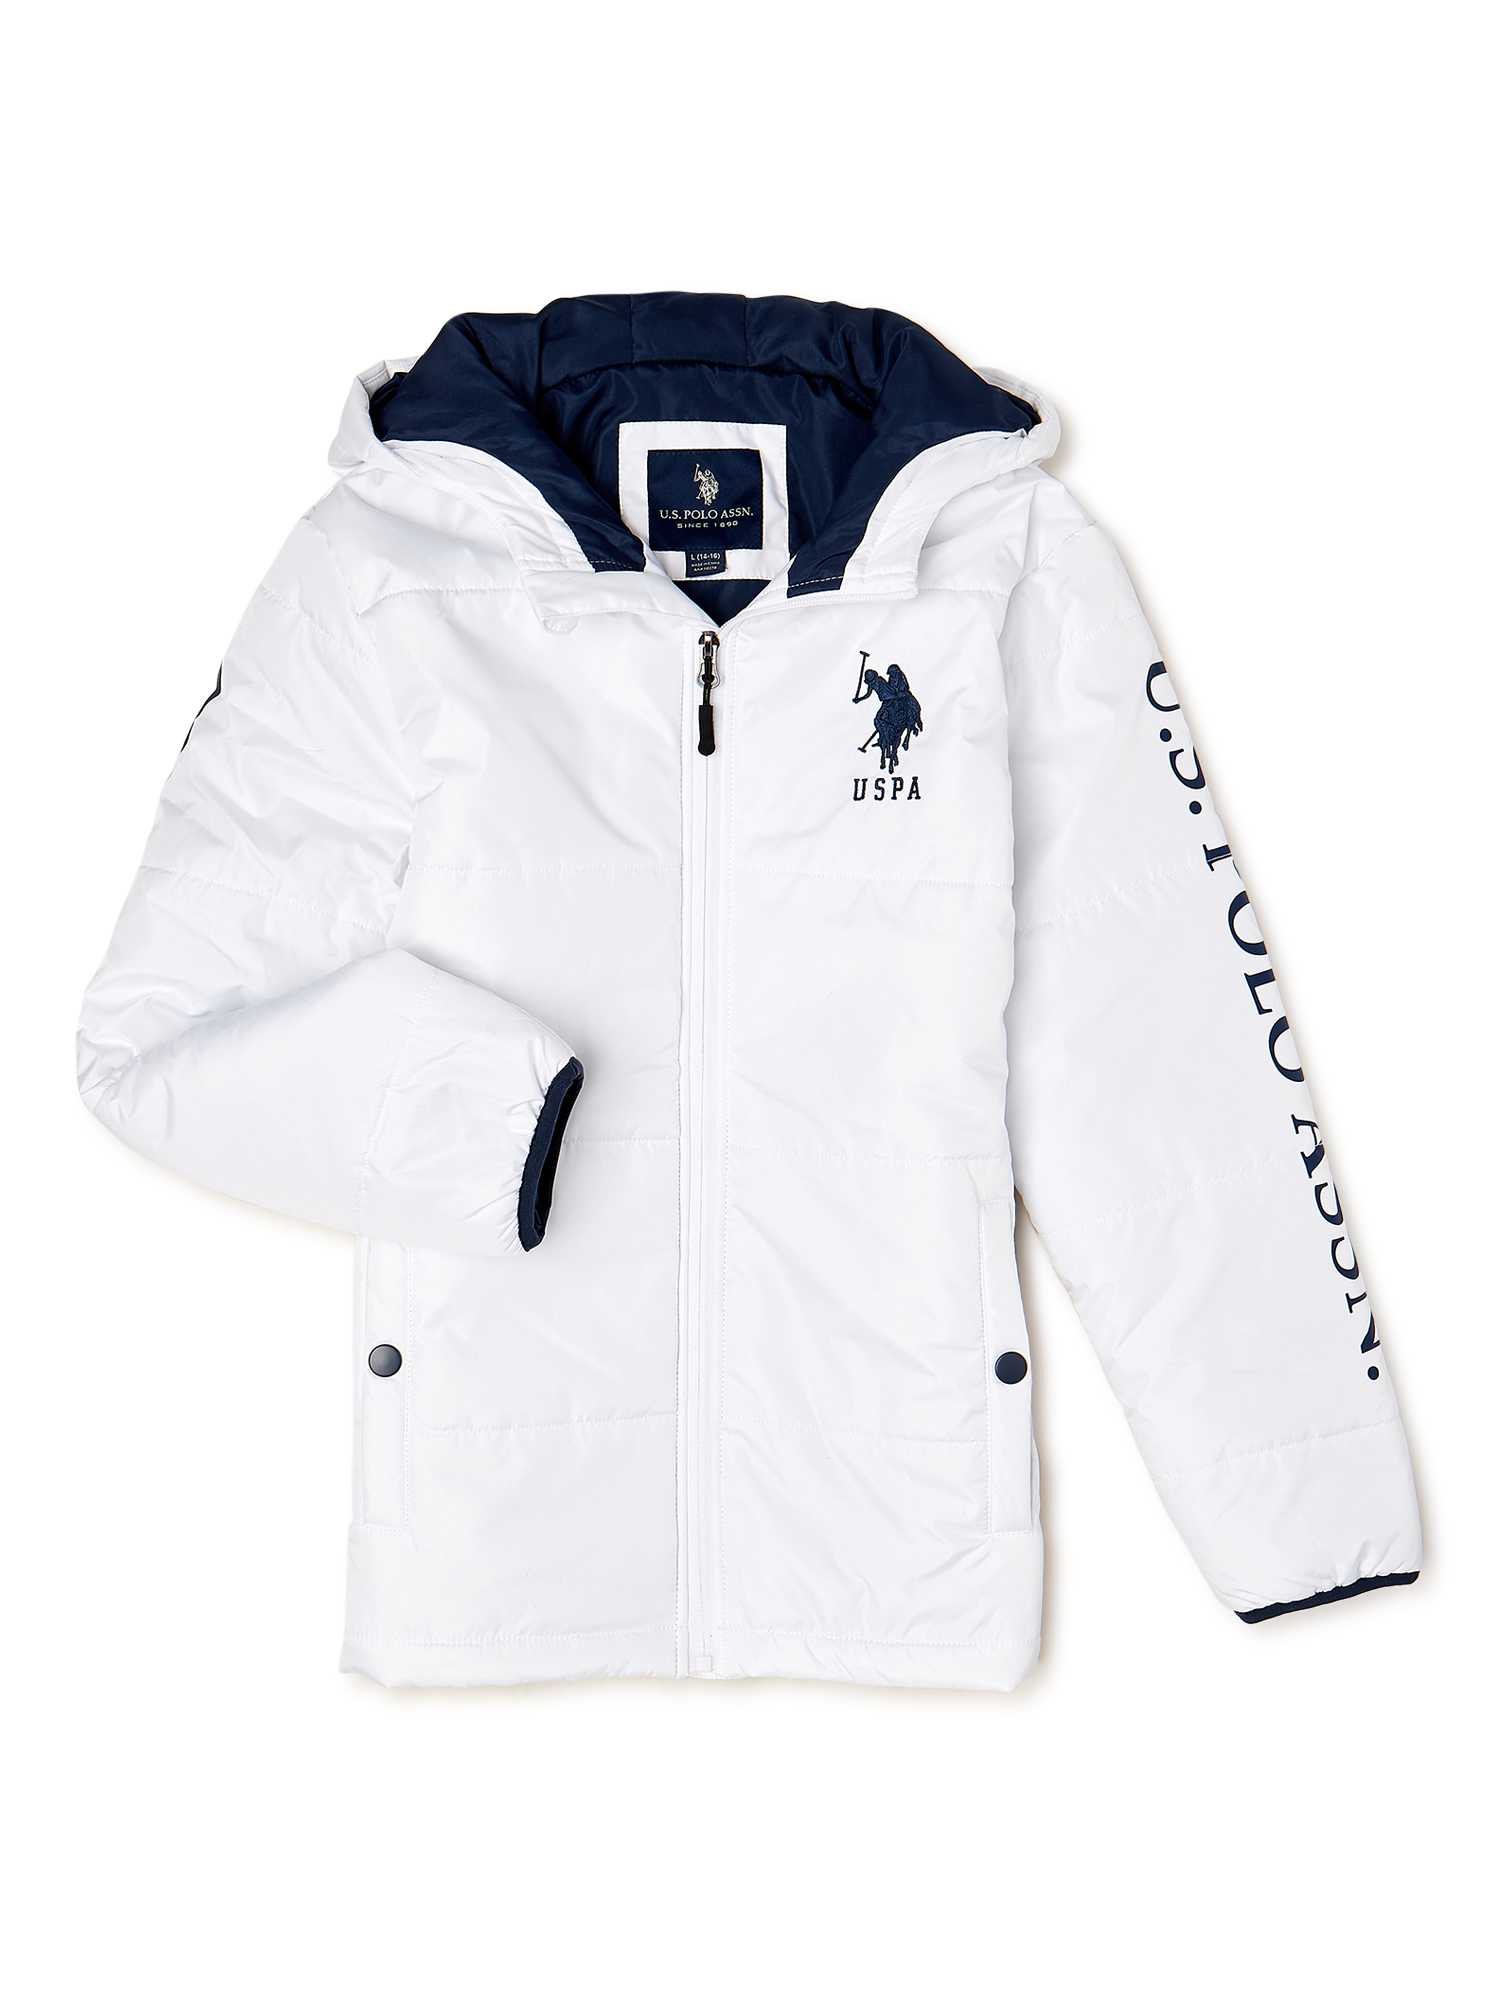 U.S. Polo Assn. Boys’ Logo Puffer Jacket, Sizes 8-20 - image 1 of 5